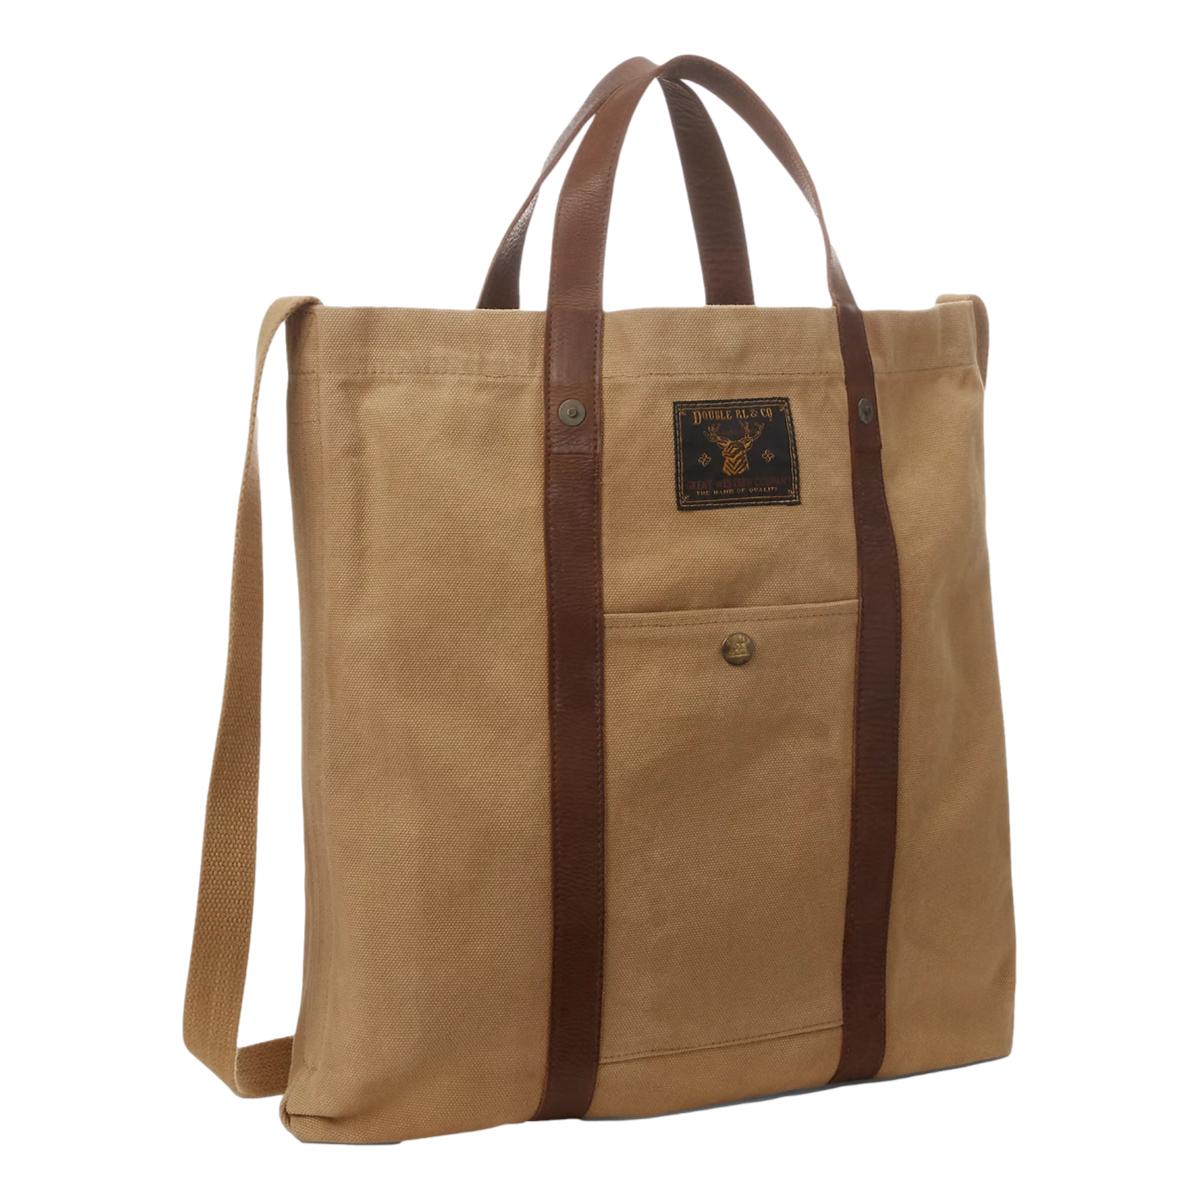 Leather-Trim Canvas Tote Khaki Brown - Bag